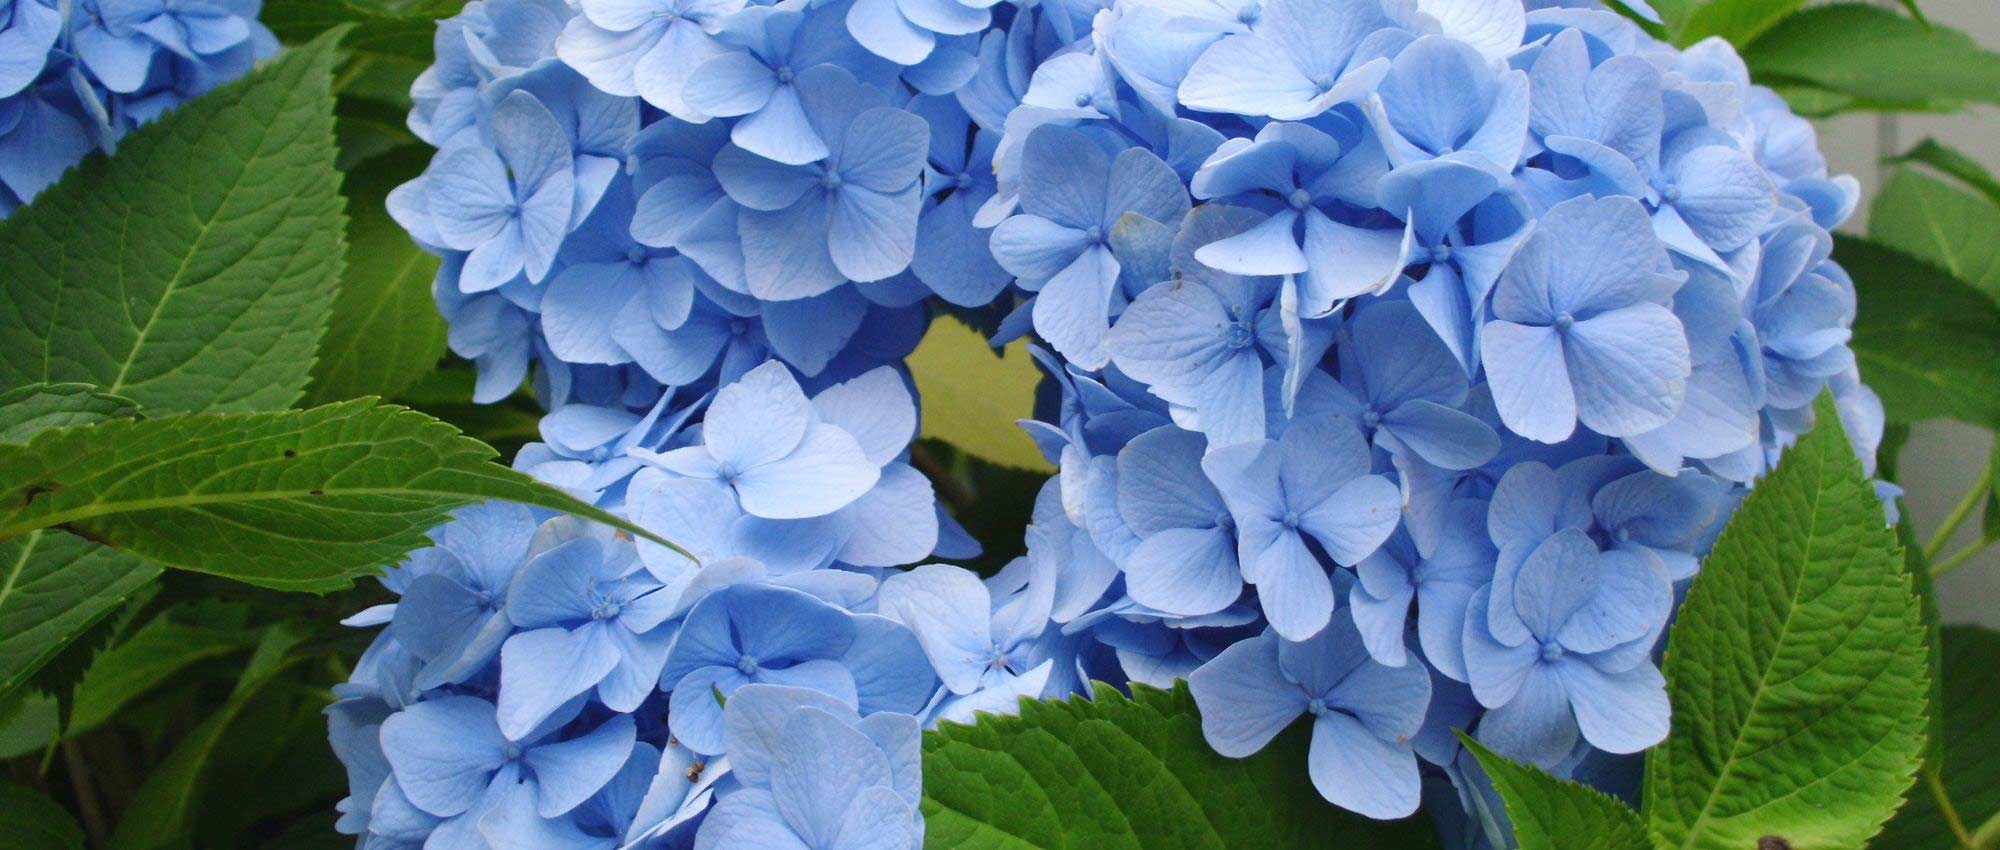 Hortensia bleu : les meilleures variétés